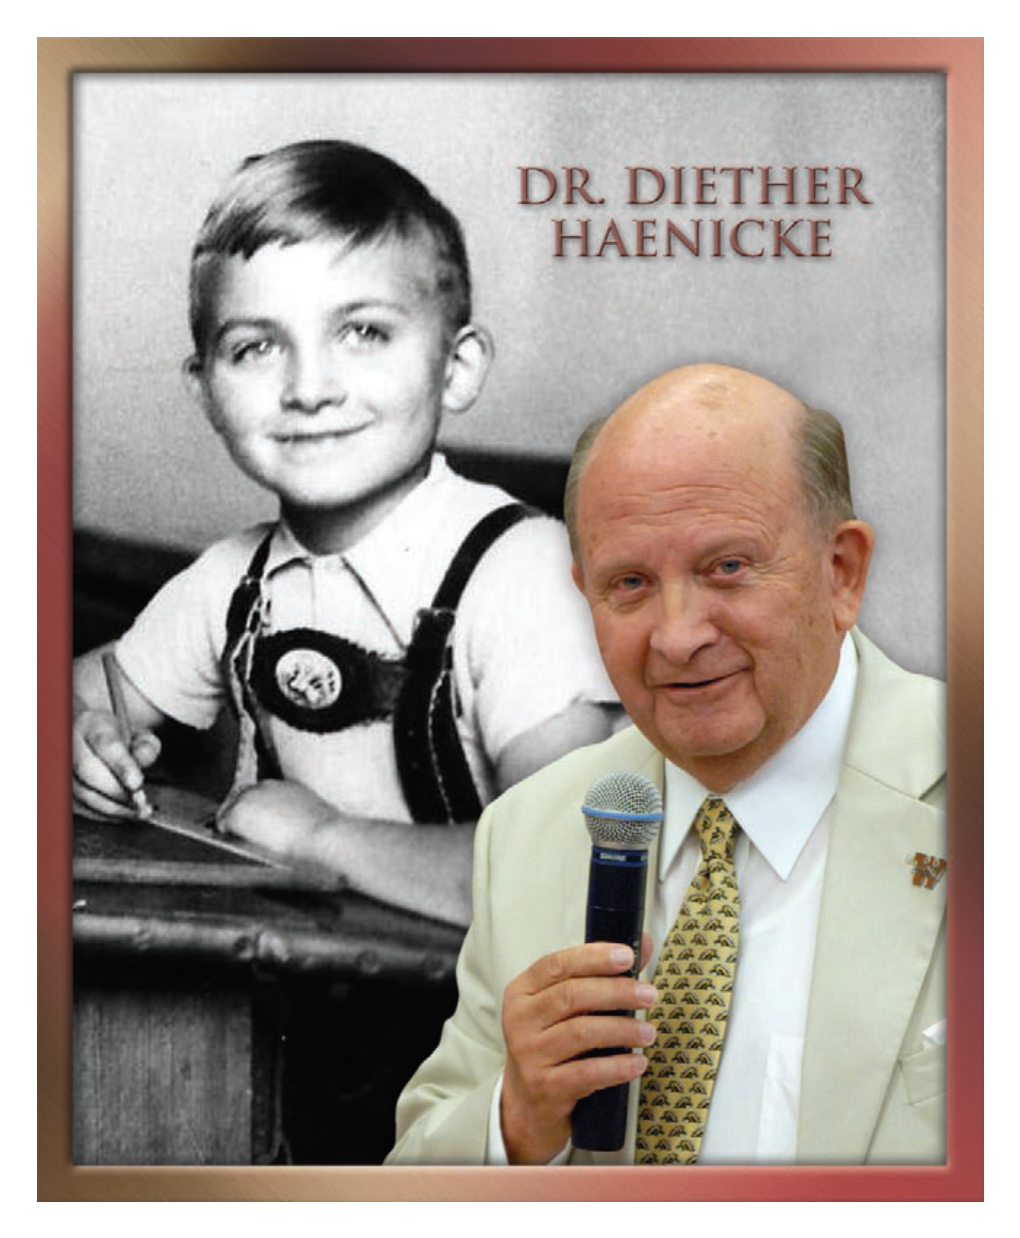 Dr. Diether Hans Haenicke's Life